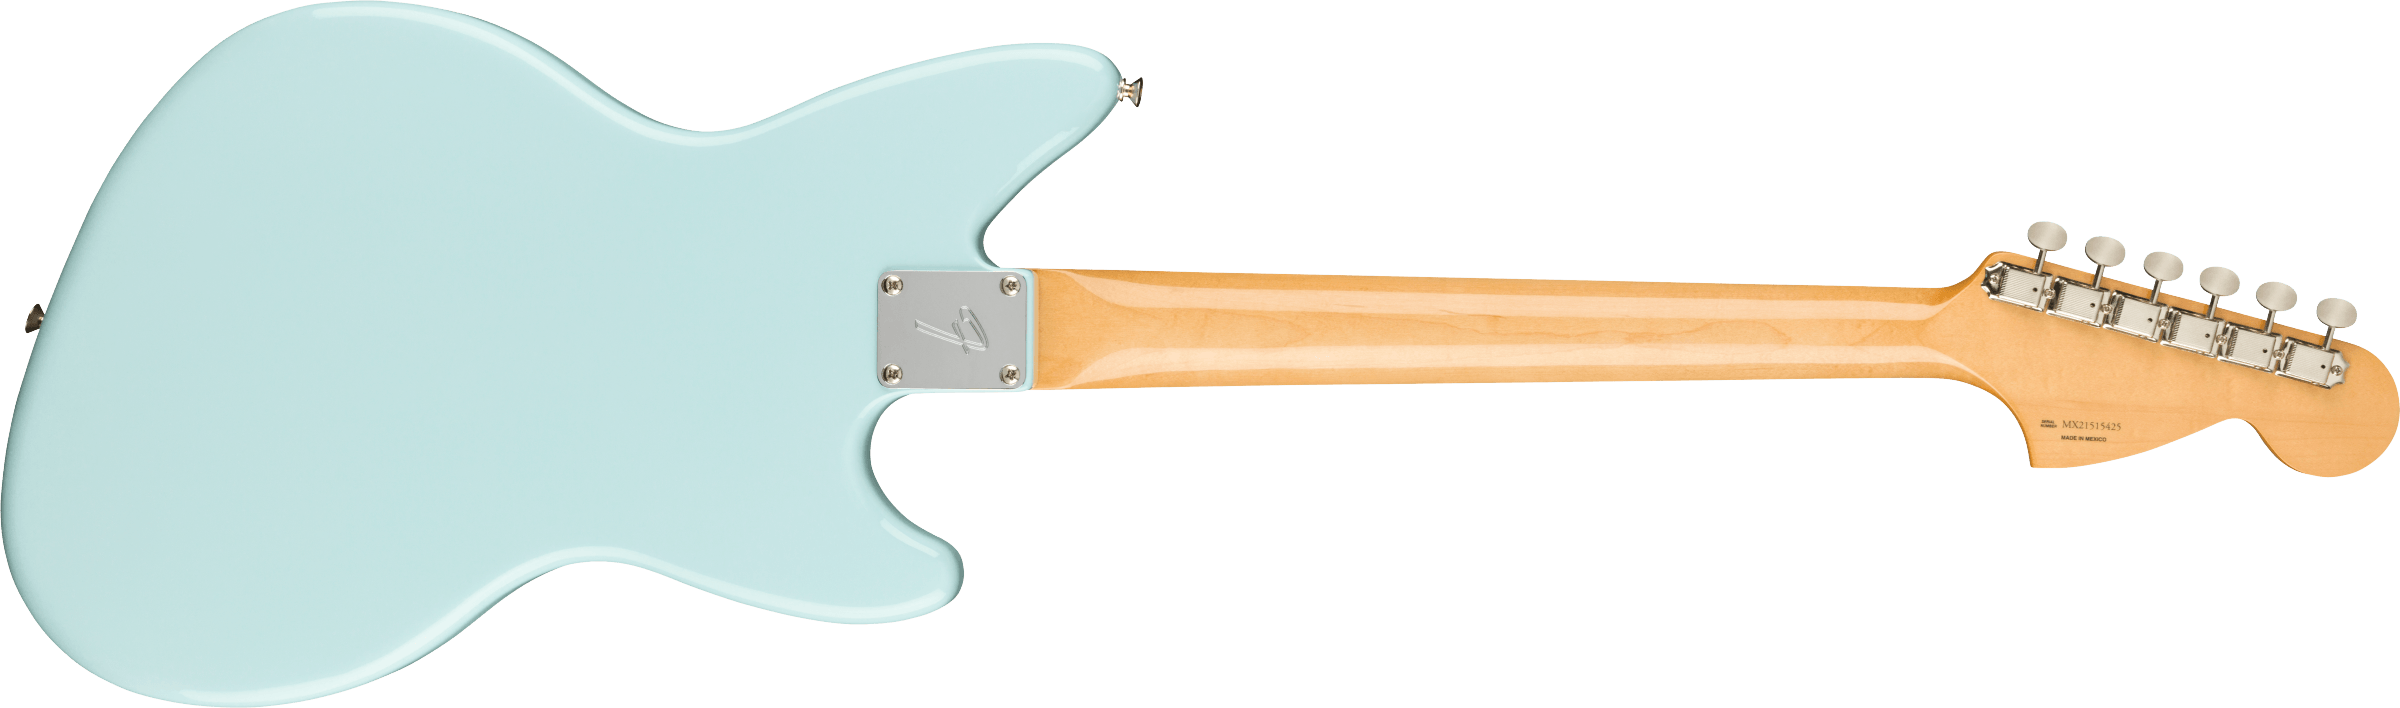 Fender Jag-stang Kurt Cobain Artist Gaucher Hs Trem Rw - Sonic Blue - Guitare Électrique Gaucher - Variation 1